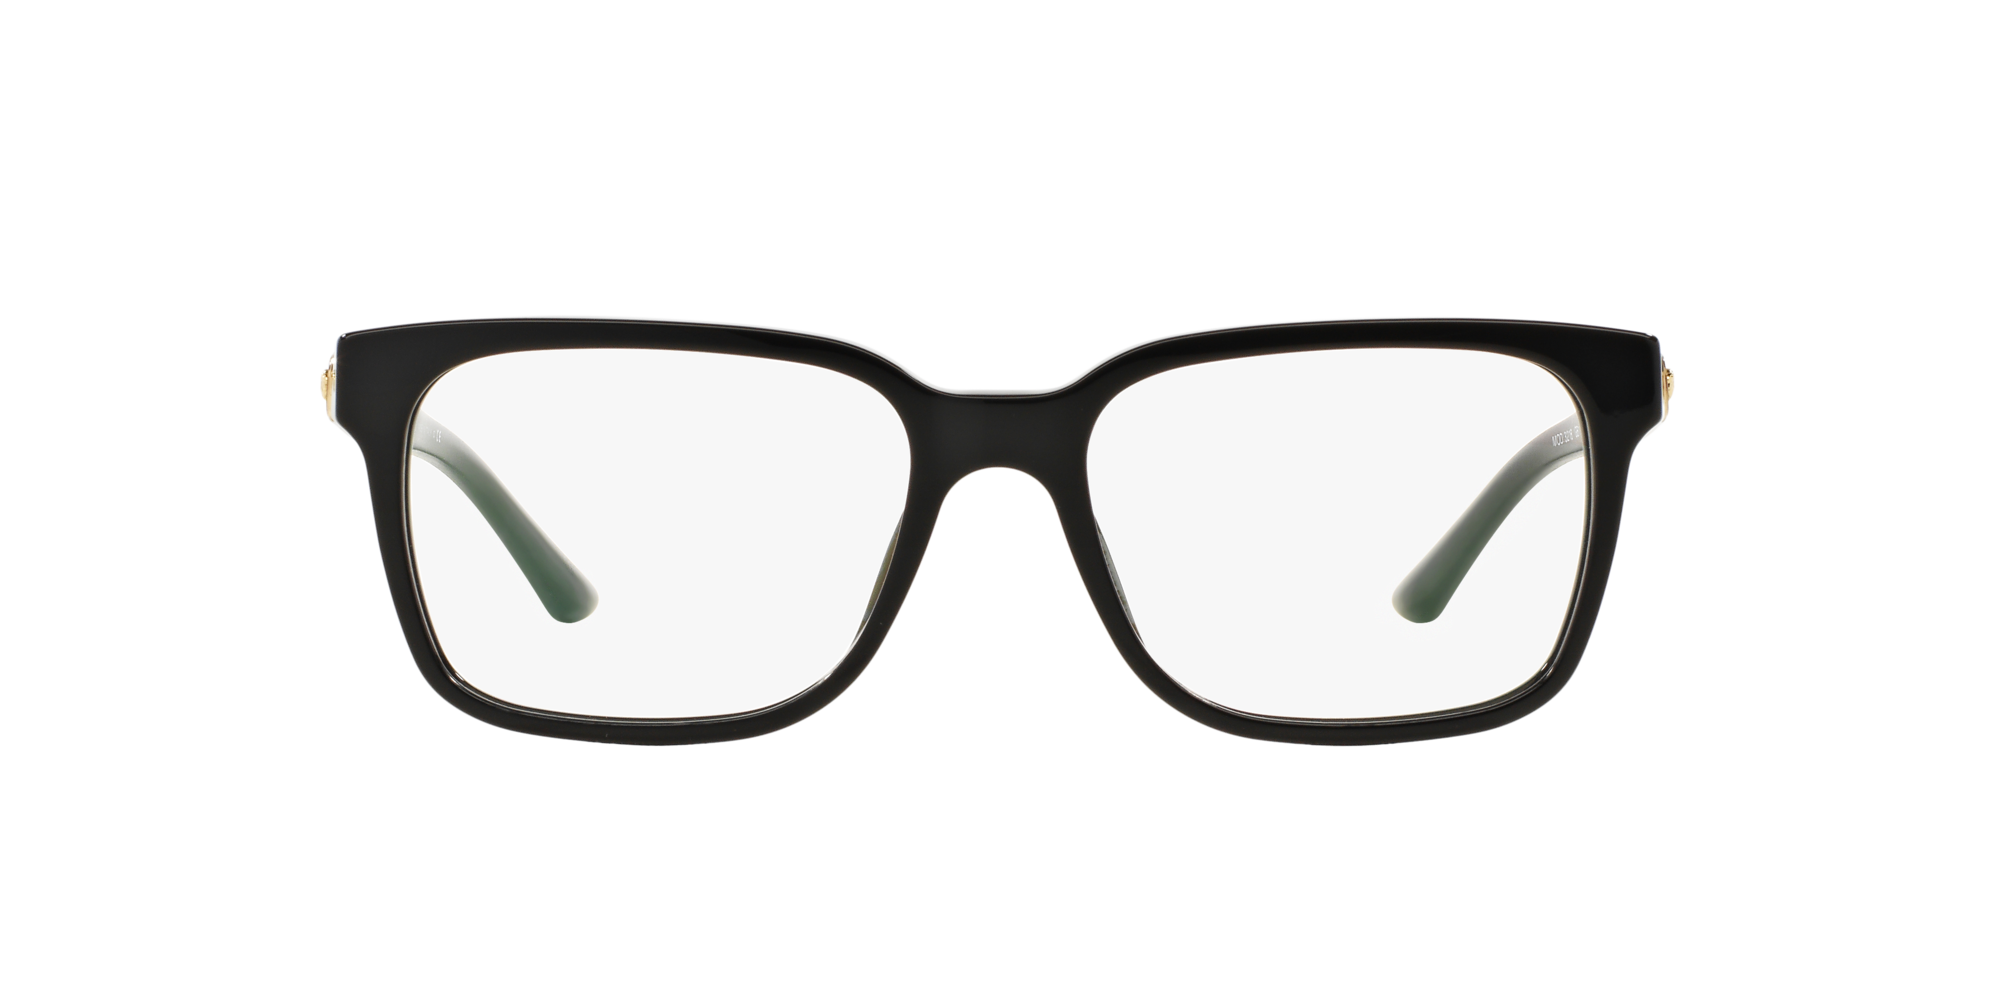 versace men's eyeglasses lenscrafters